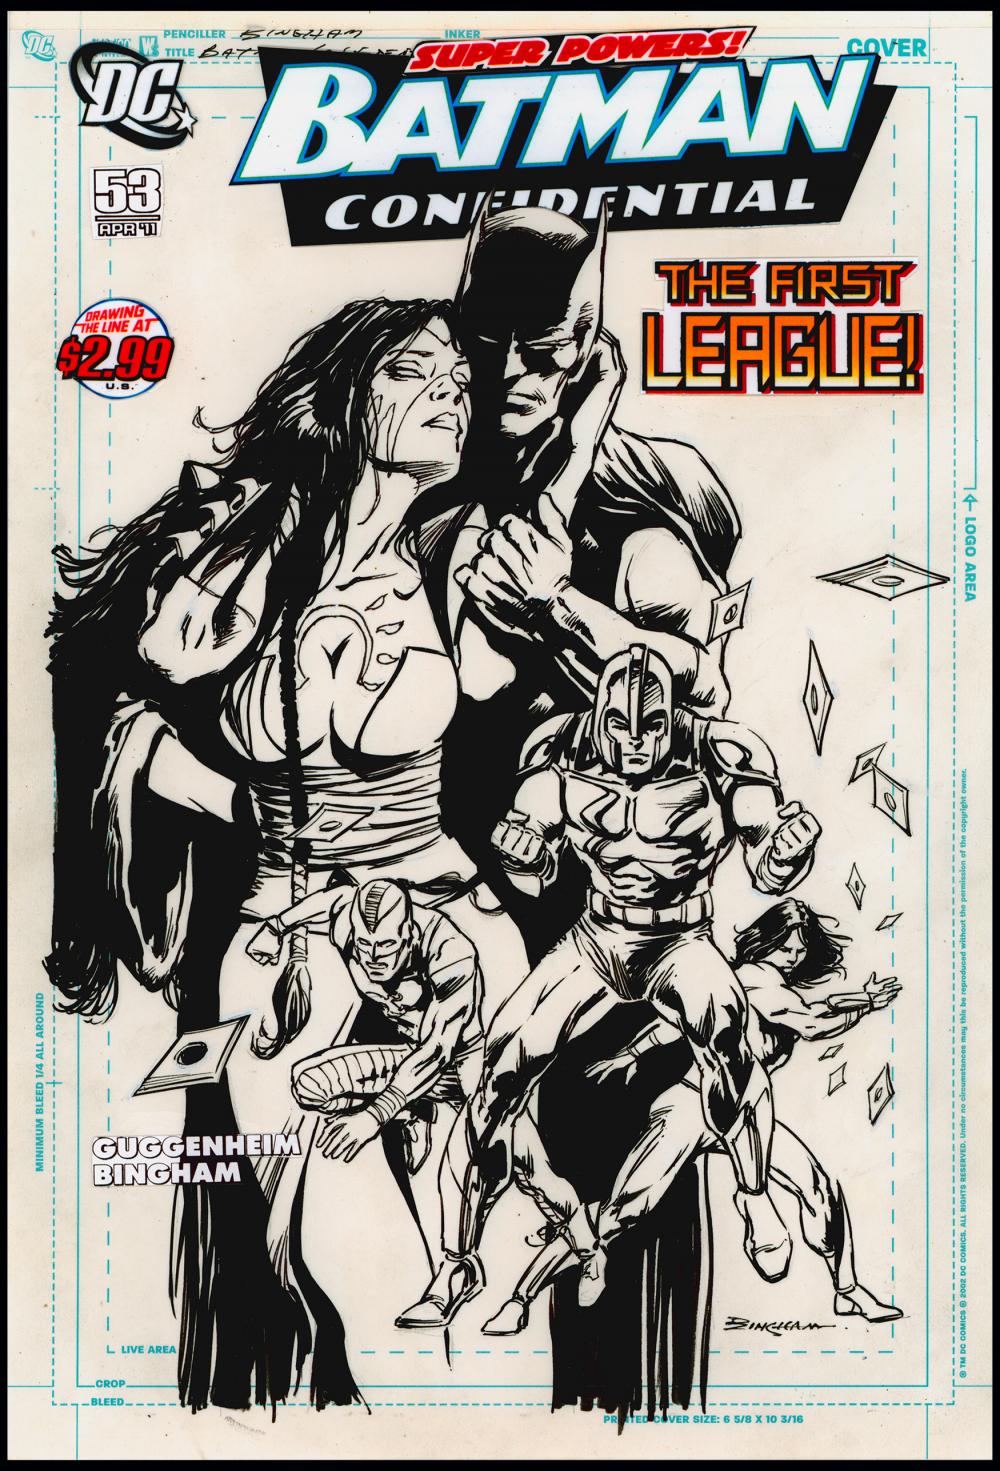 Image: Batman Confidential #53 Cover art by Jerry Bingham